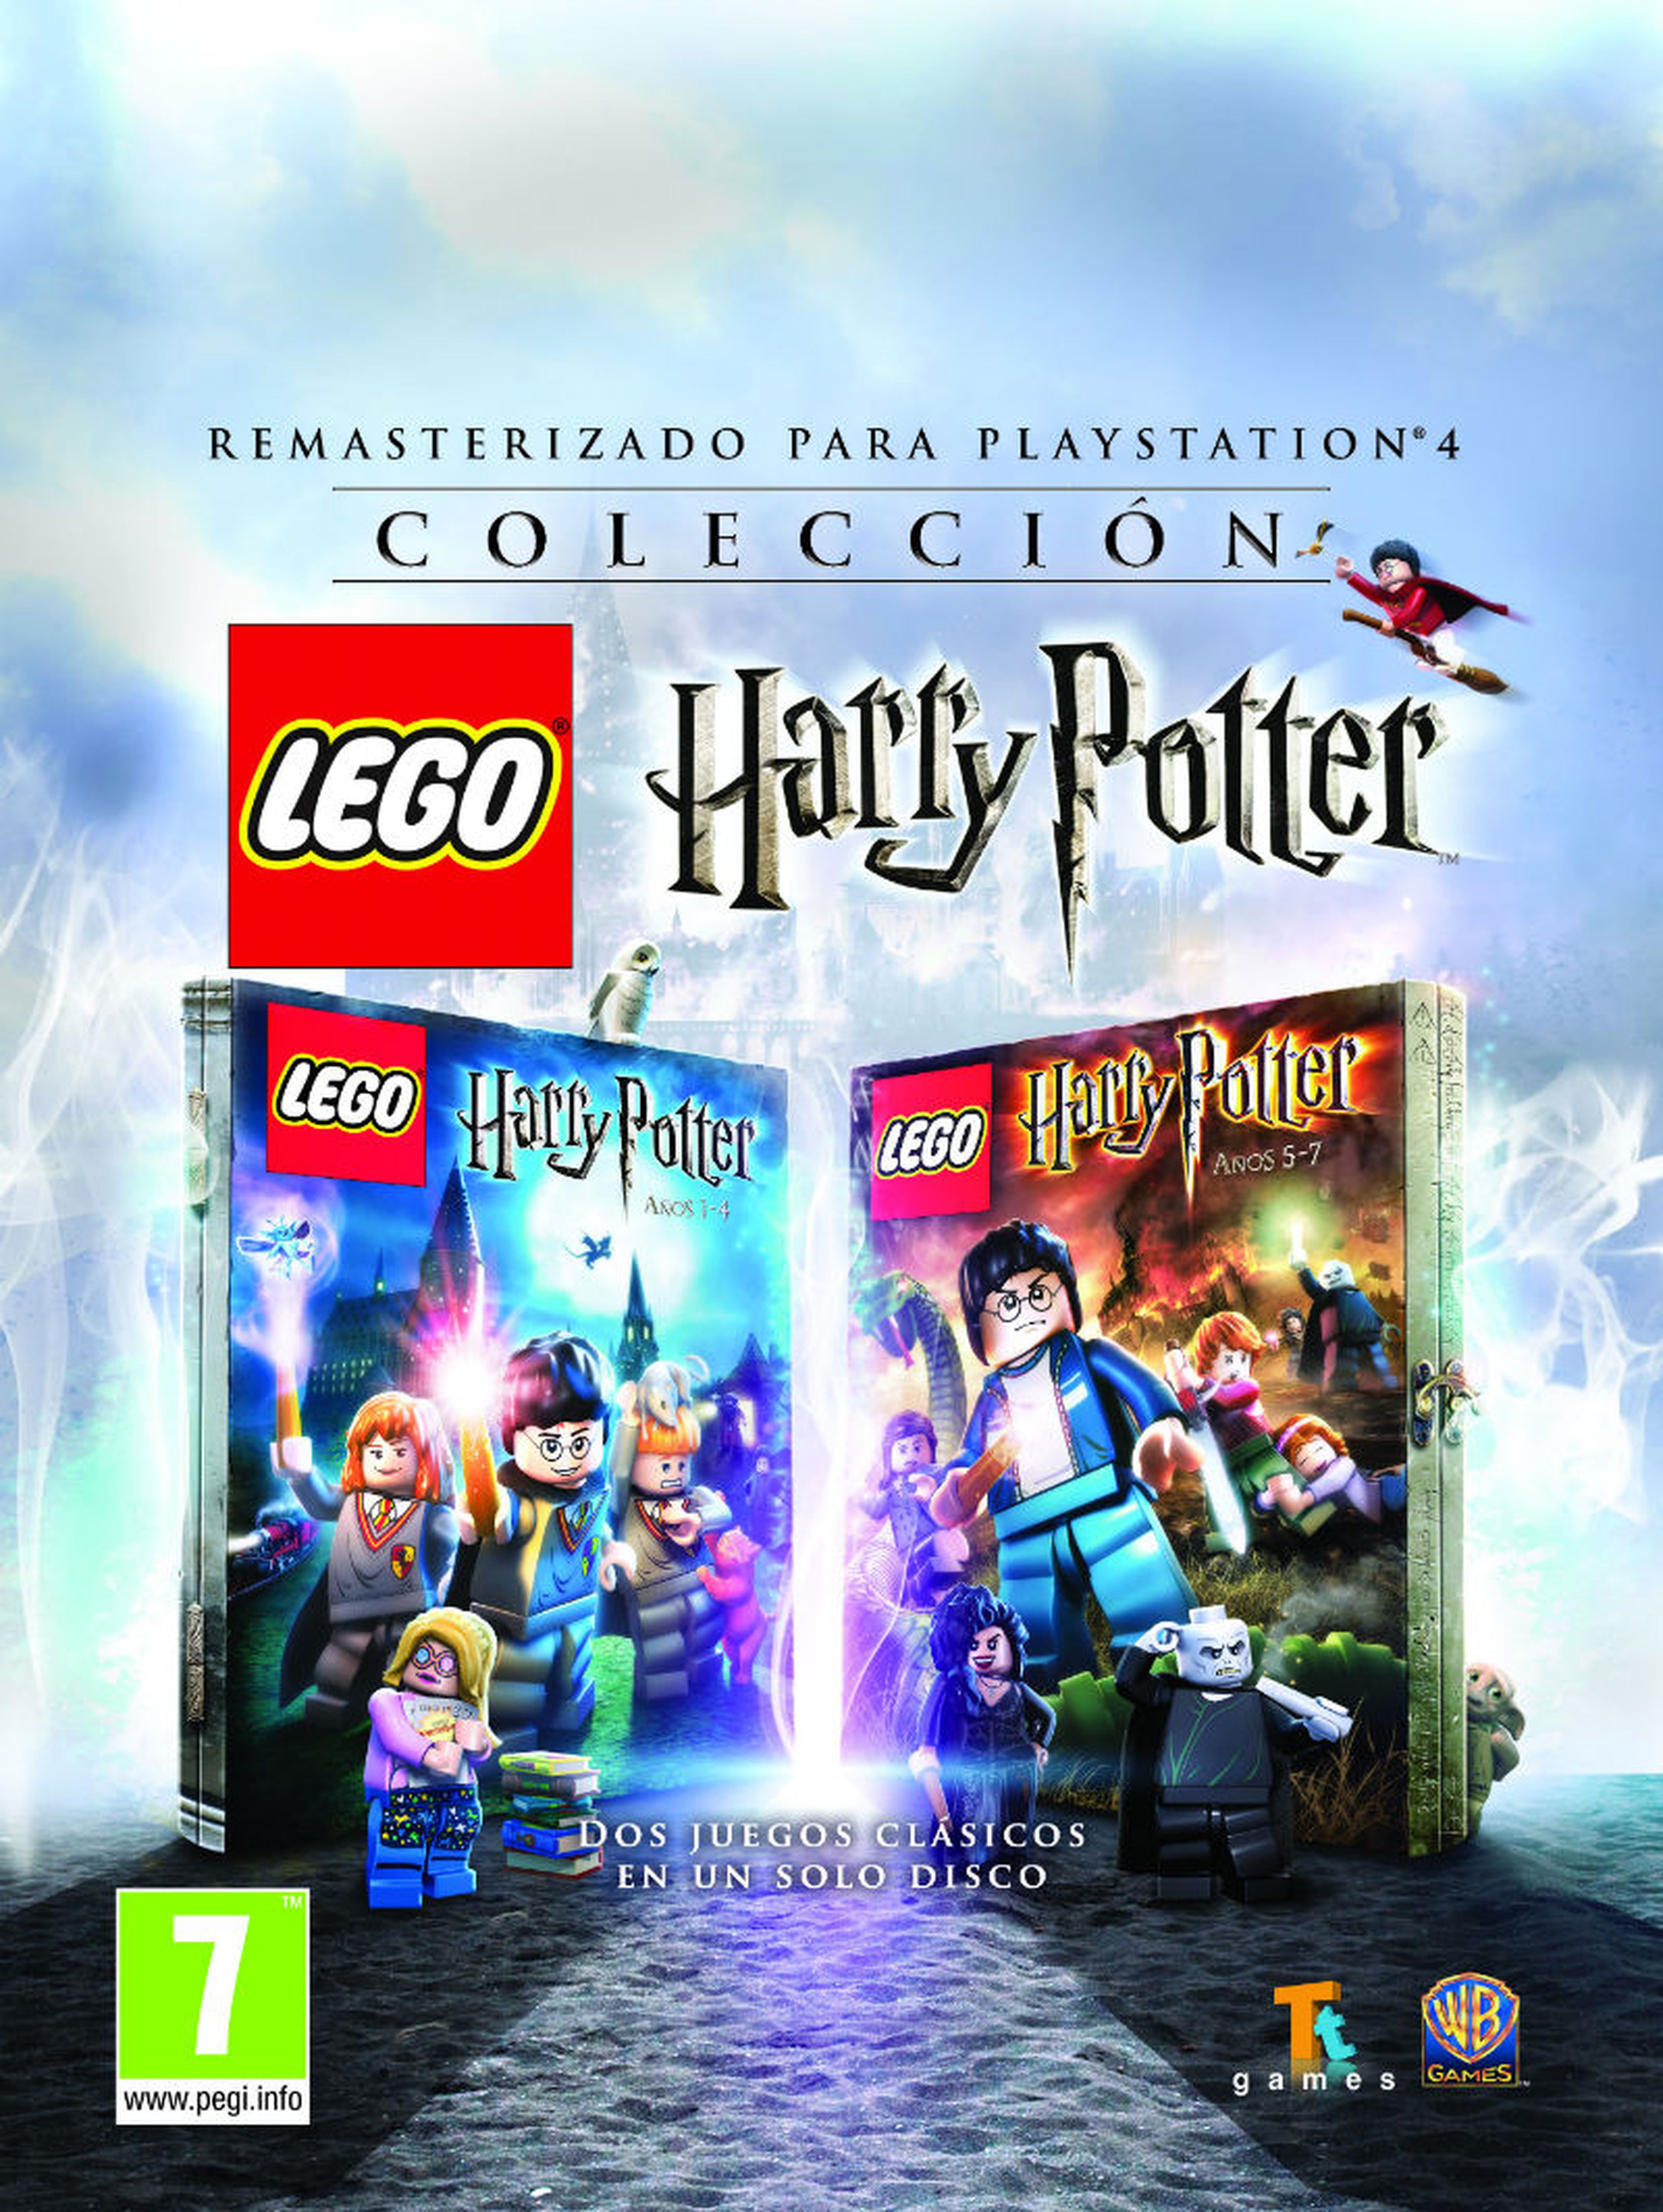 LEGO Harry Potter PS4